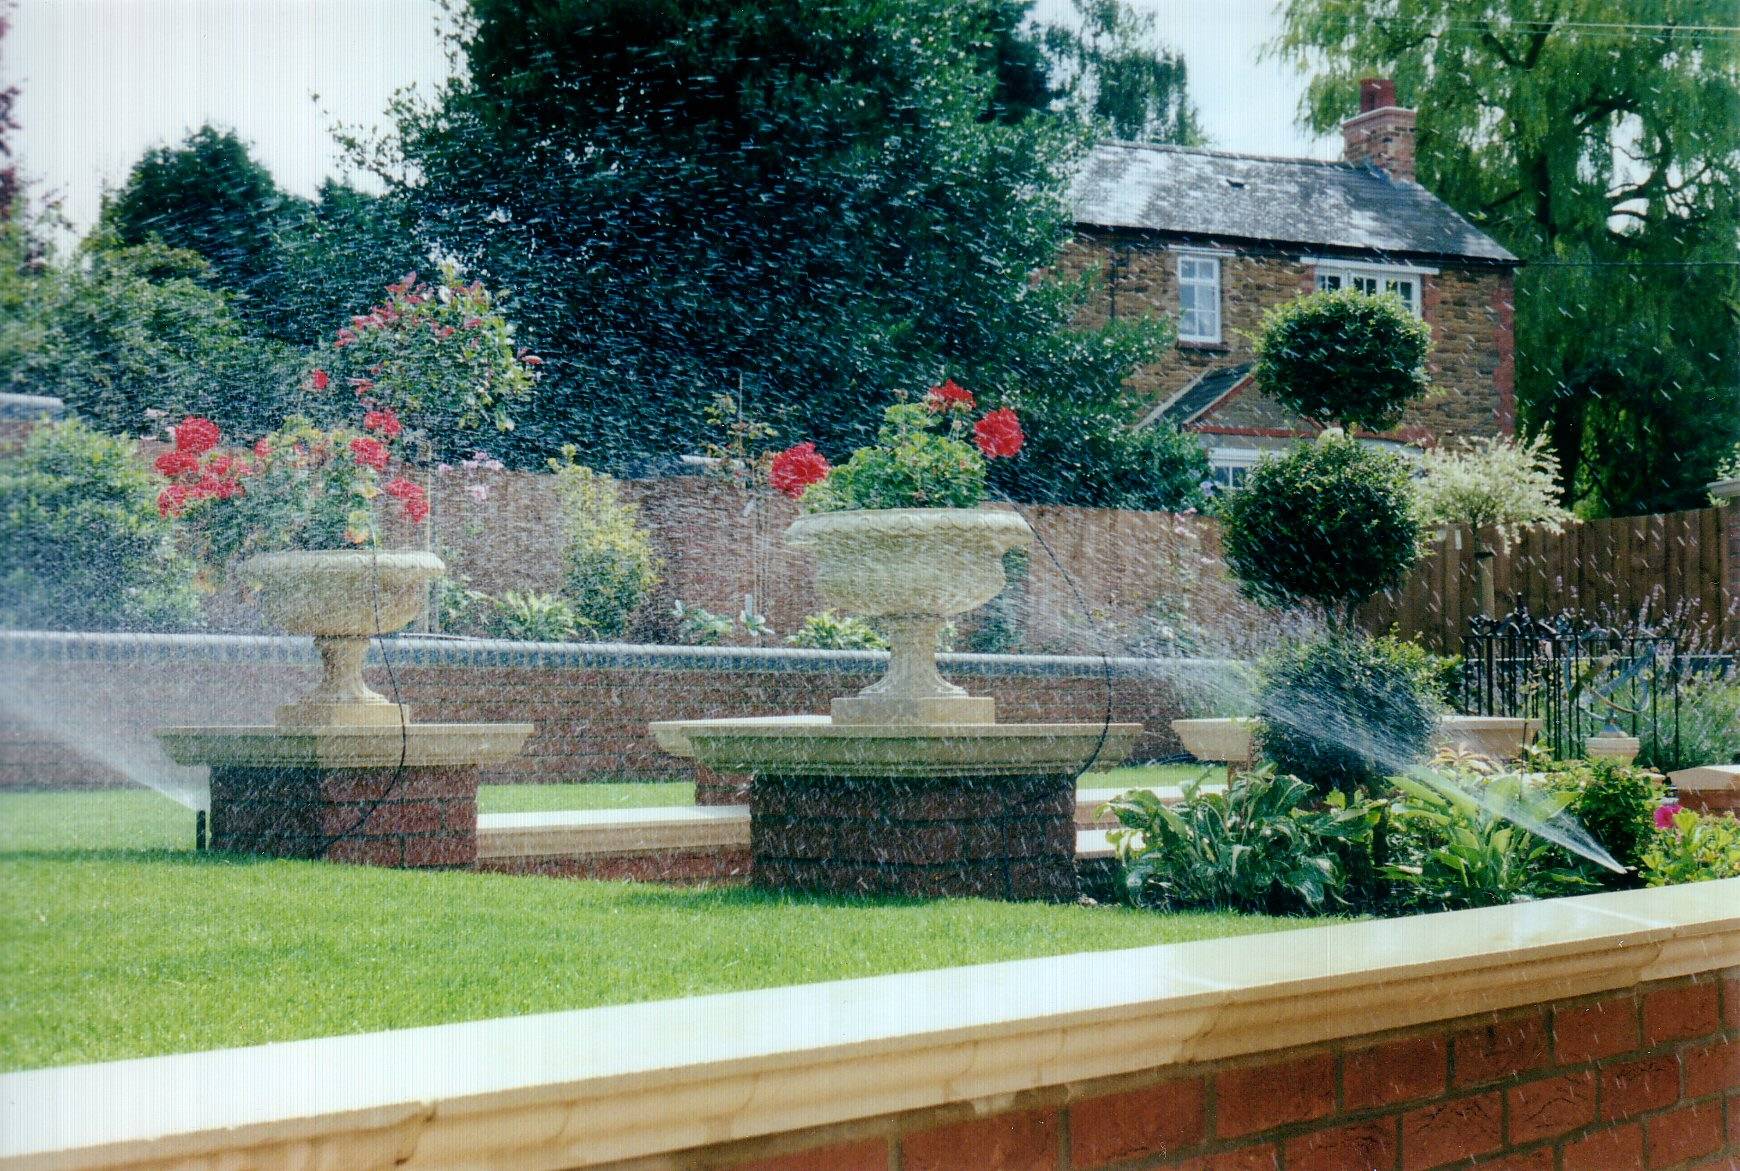 Garden with pop up lawn watering sprinklers